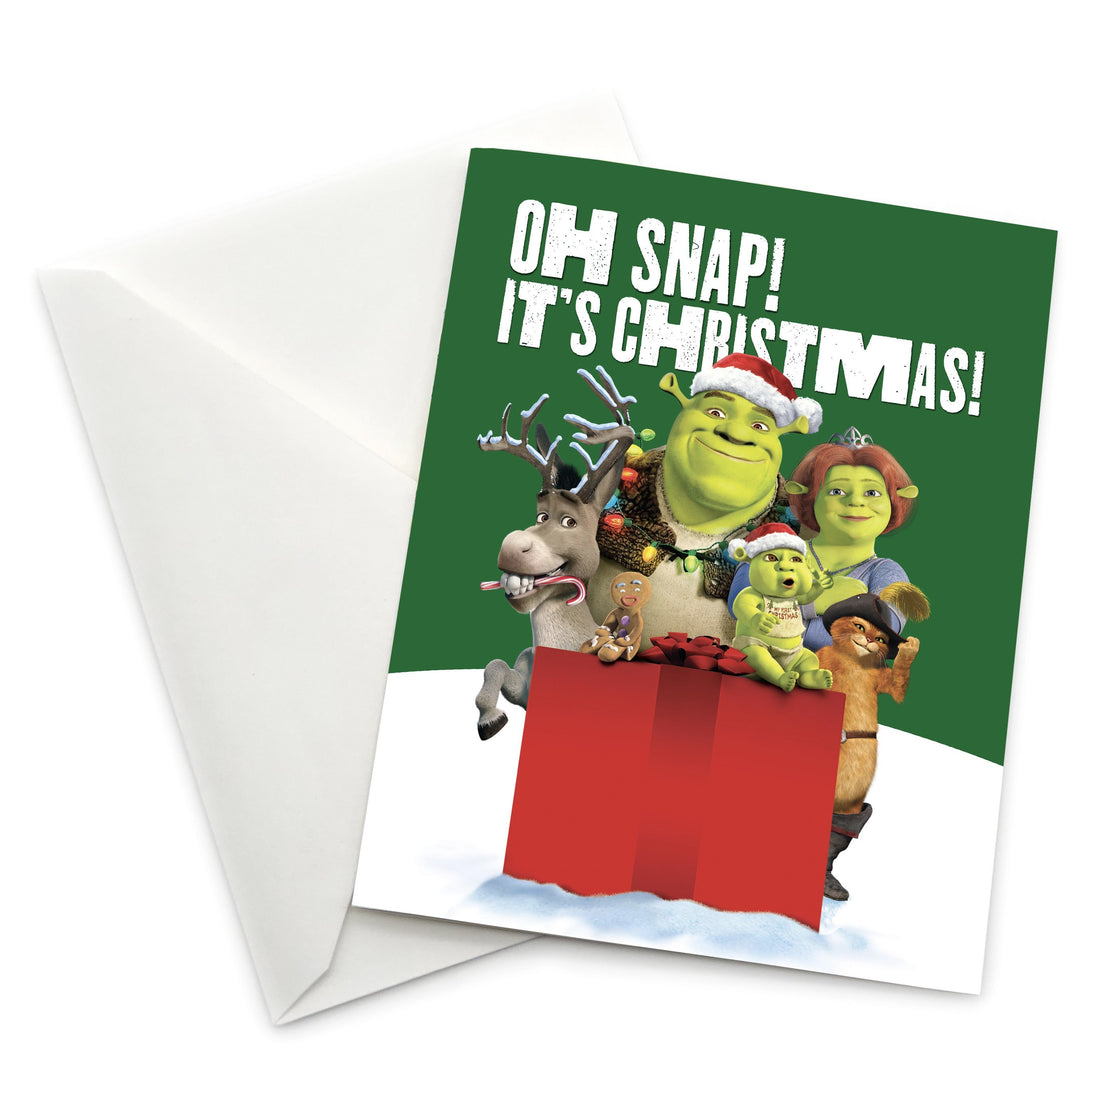 Shrek "Oh Snap! It's Christmas!" Holiday Card